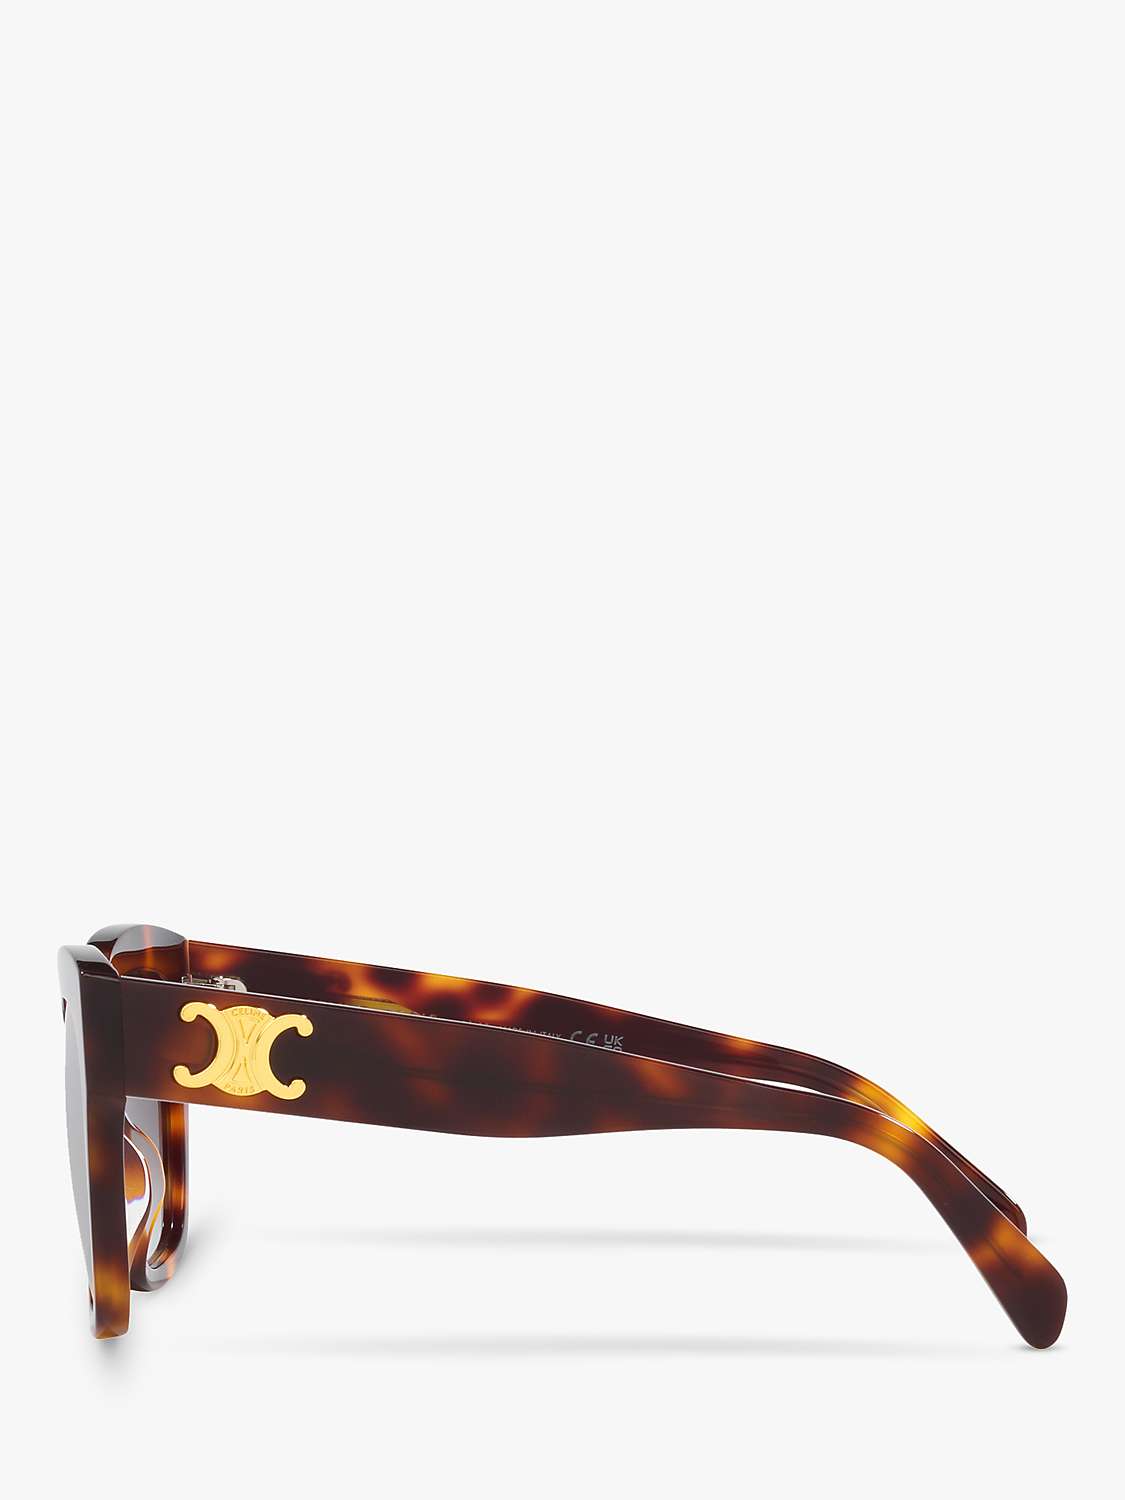 Buy Celine CL40253I Women's Cat's Eye Sunglasses, Tortoise/Brown Gradient Online at johnlewis.com